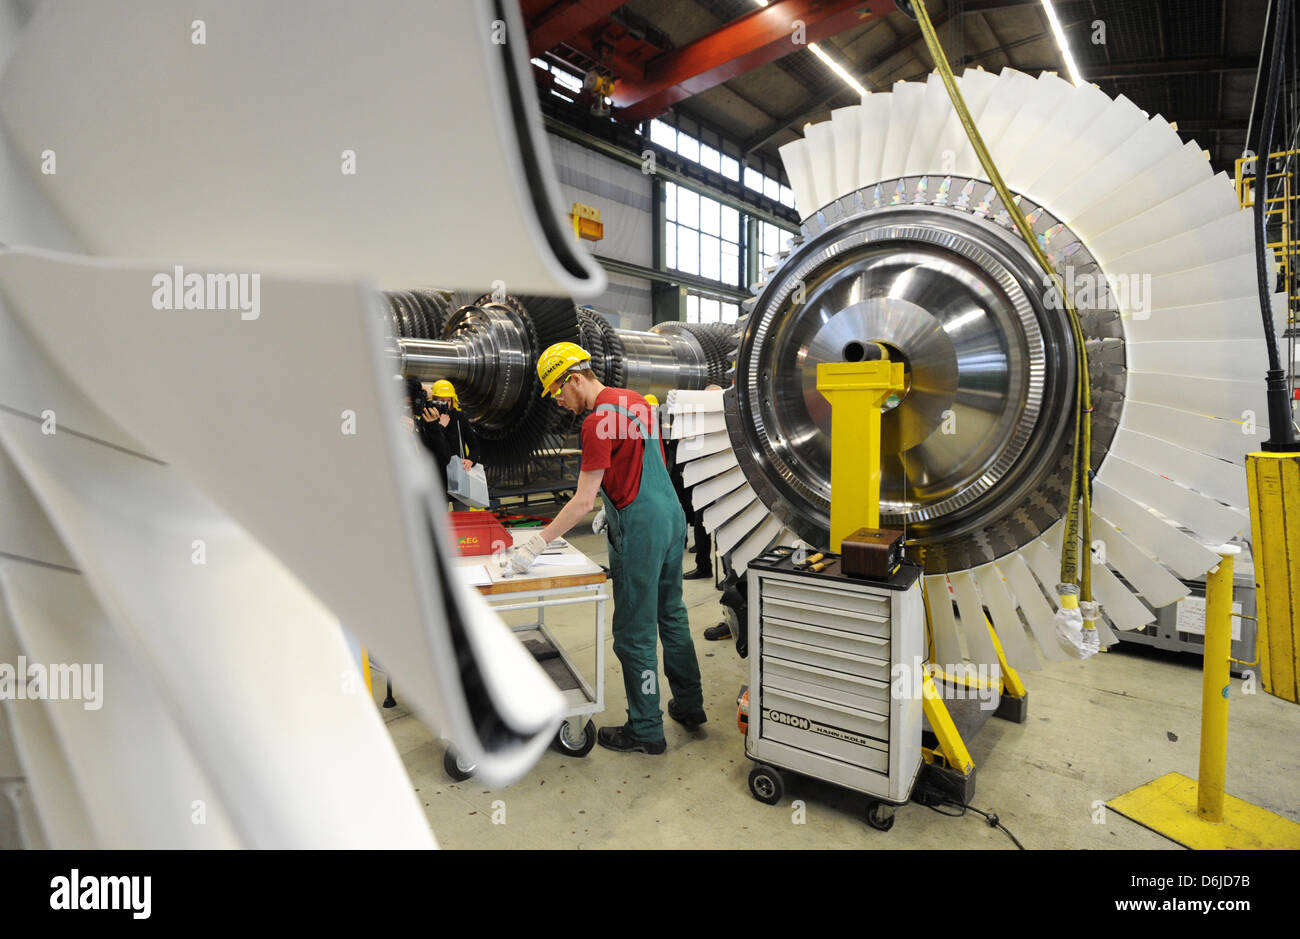 A Siemens employee works on a turbine blade wheel on the premises of the Siemens gas turbine plant in Berlin, Germany, 14 March 2012. Siemens is the region's largest industrial employer. Photo: Rainer Jensen Stock Photo